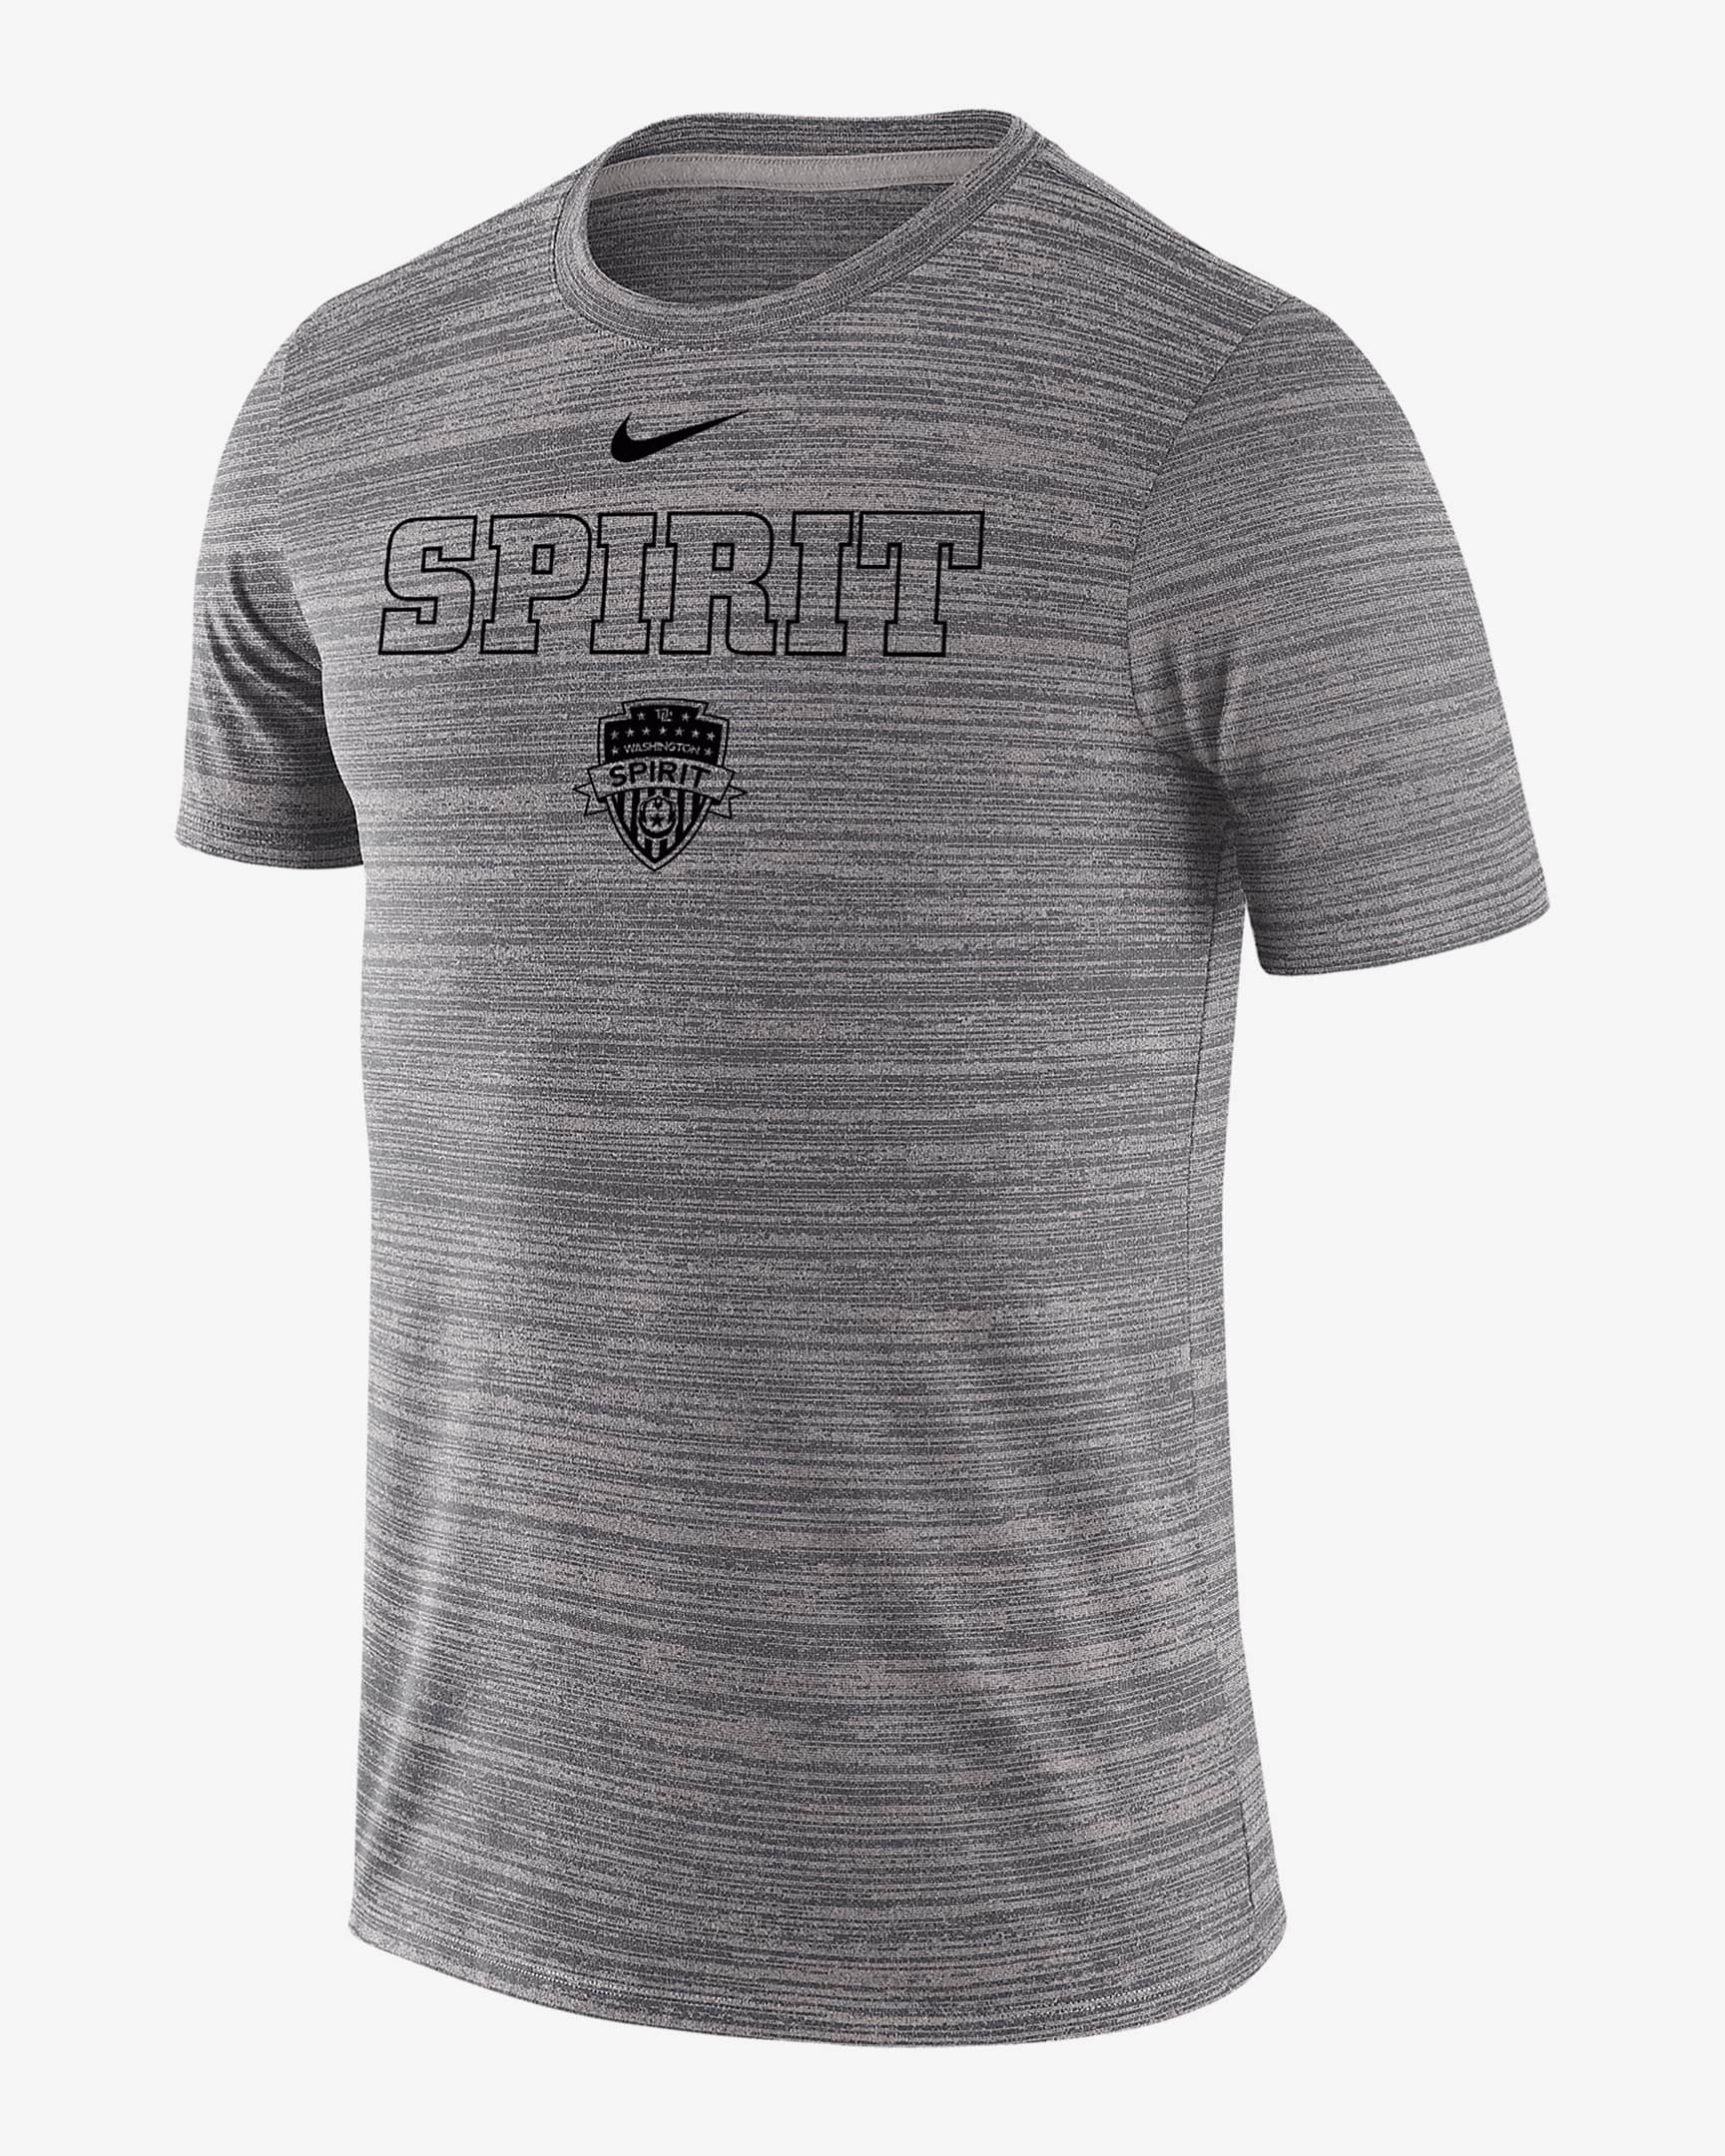 Washington Spirit Velocity Legend Men's Nike Soccer T-Shirt. Nike.com